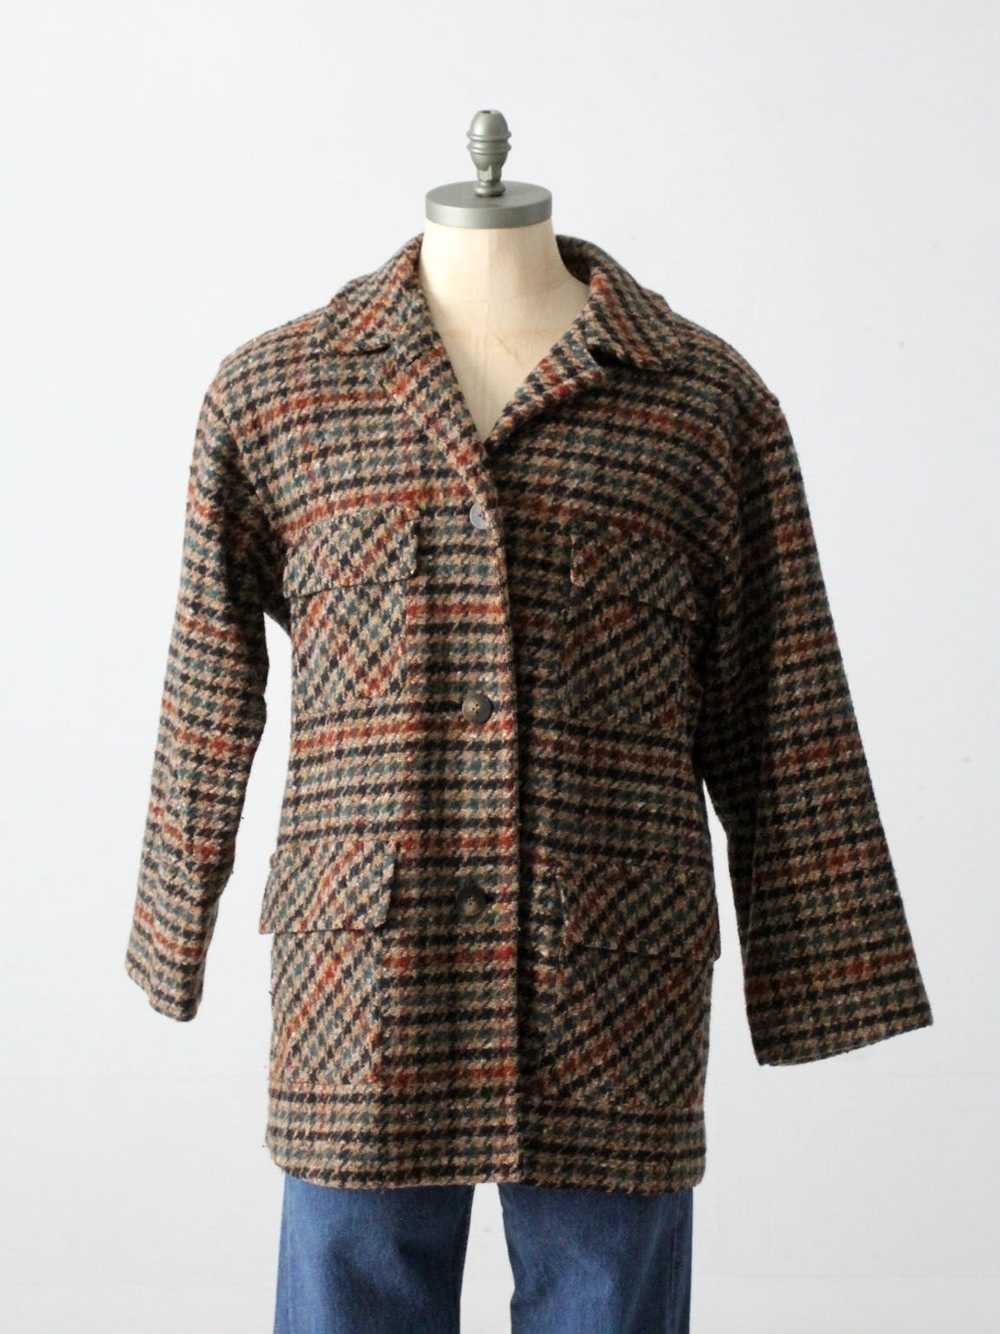 Woolrich Woolen Mills Vintage Woolrich Plaid Jack… - image 1